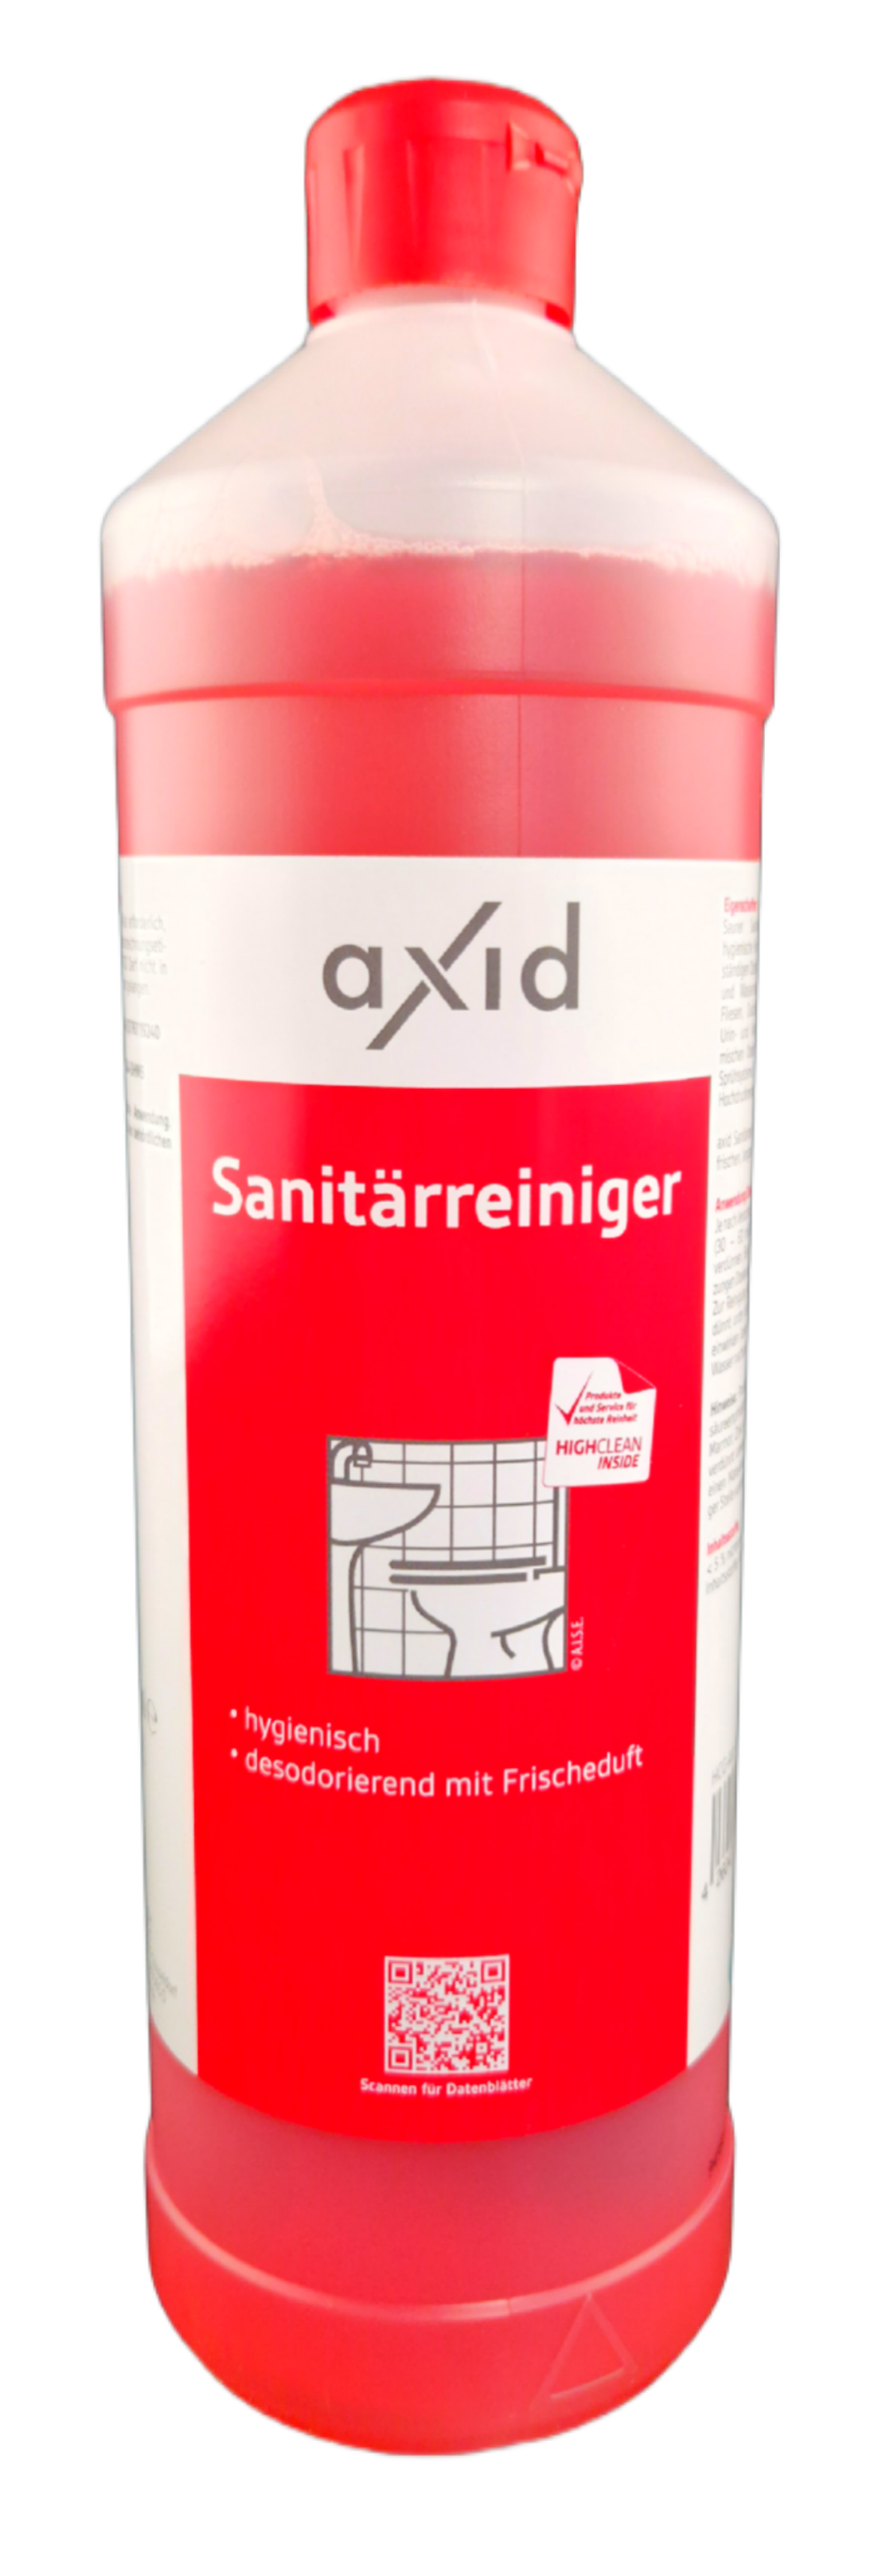 Axid - Sanitärreiniger 1L Flasche